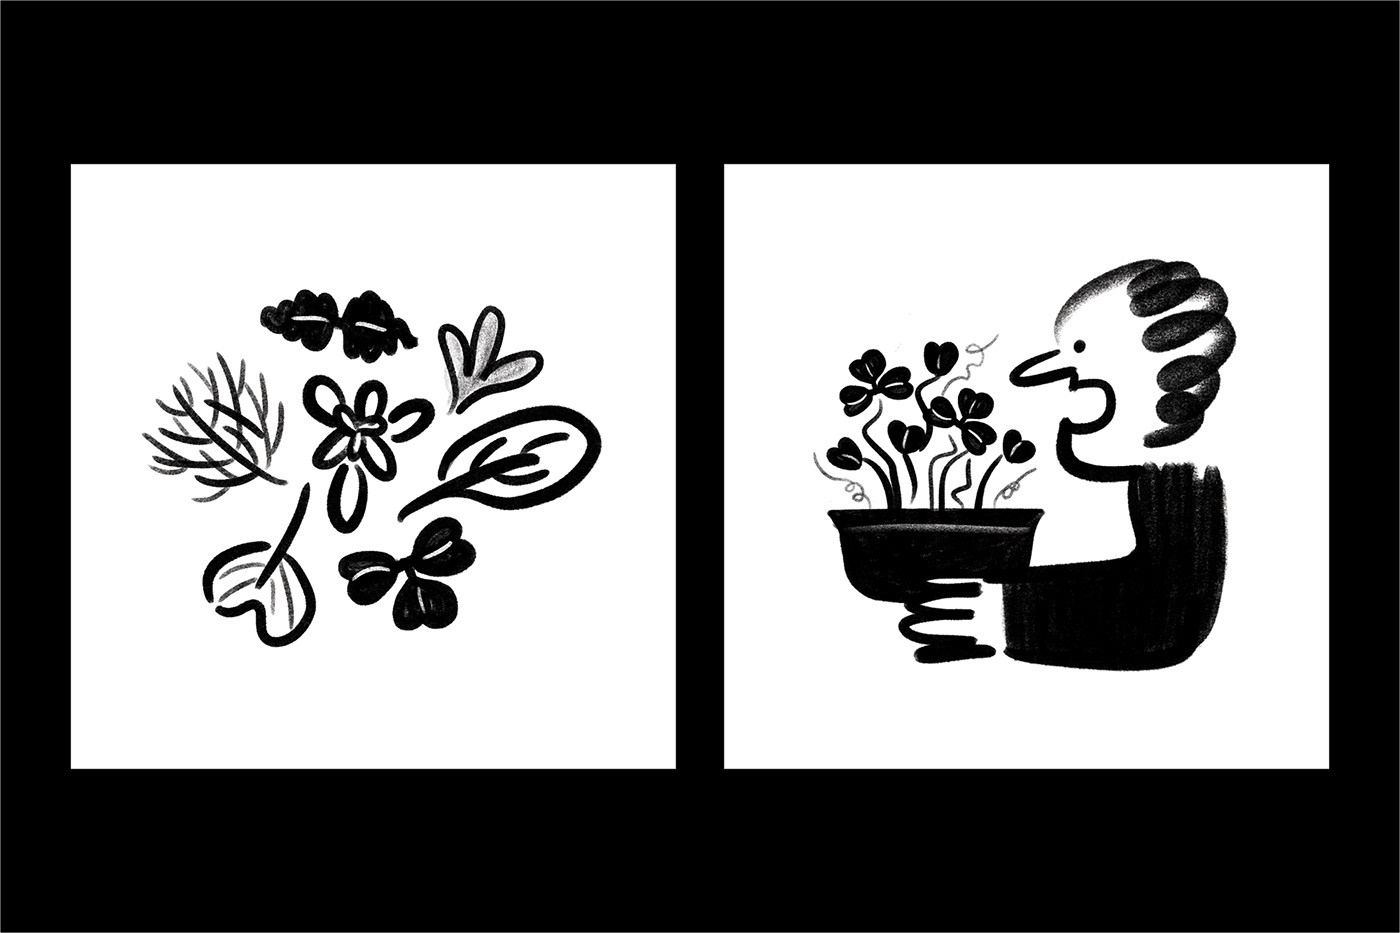 brand identity branding  farming Food  green ILLUSTRATION  Logo Design vertival farm visual identity